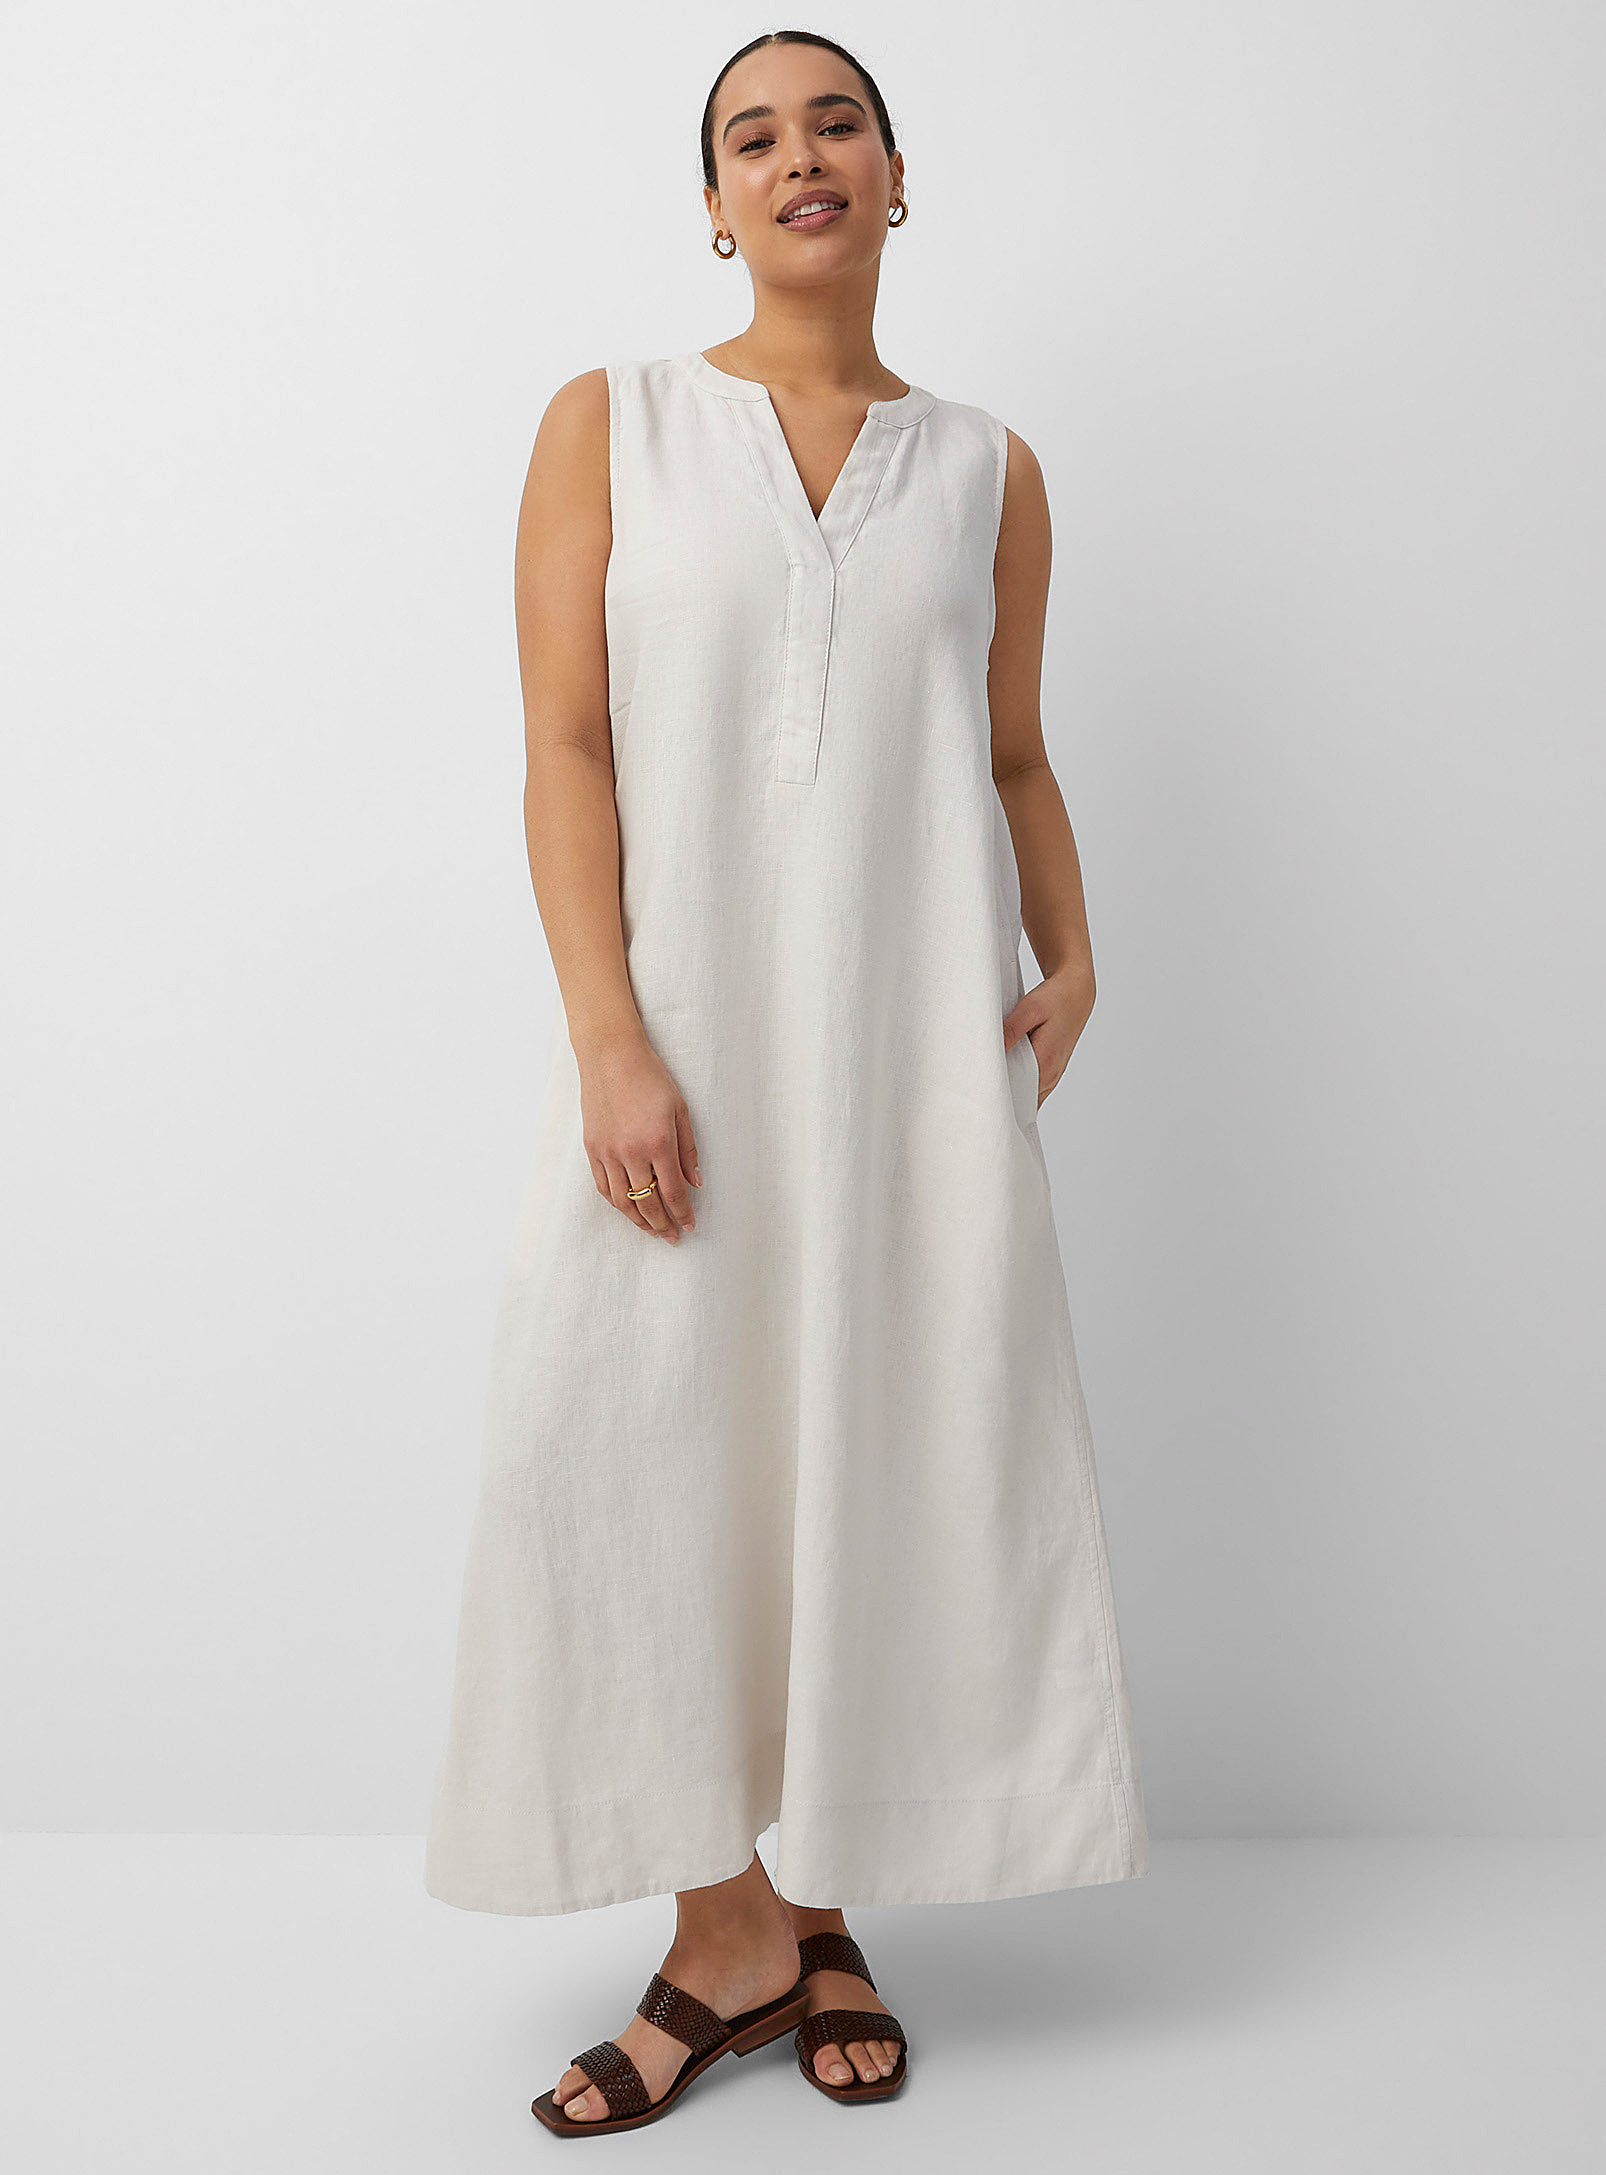 Contemporaine - Women's Split-neck organic linen dress